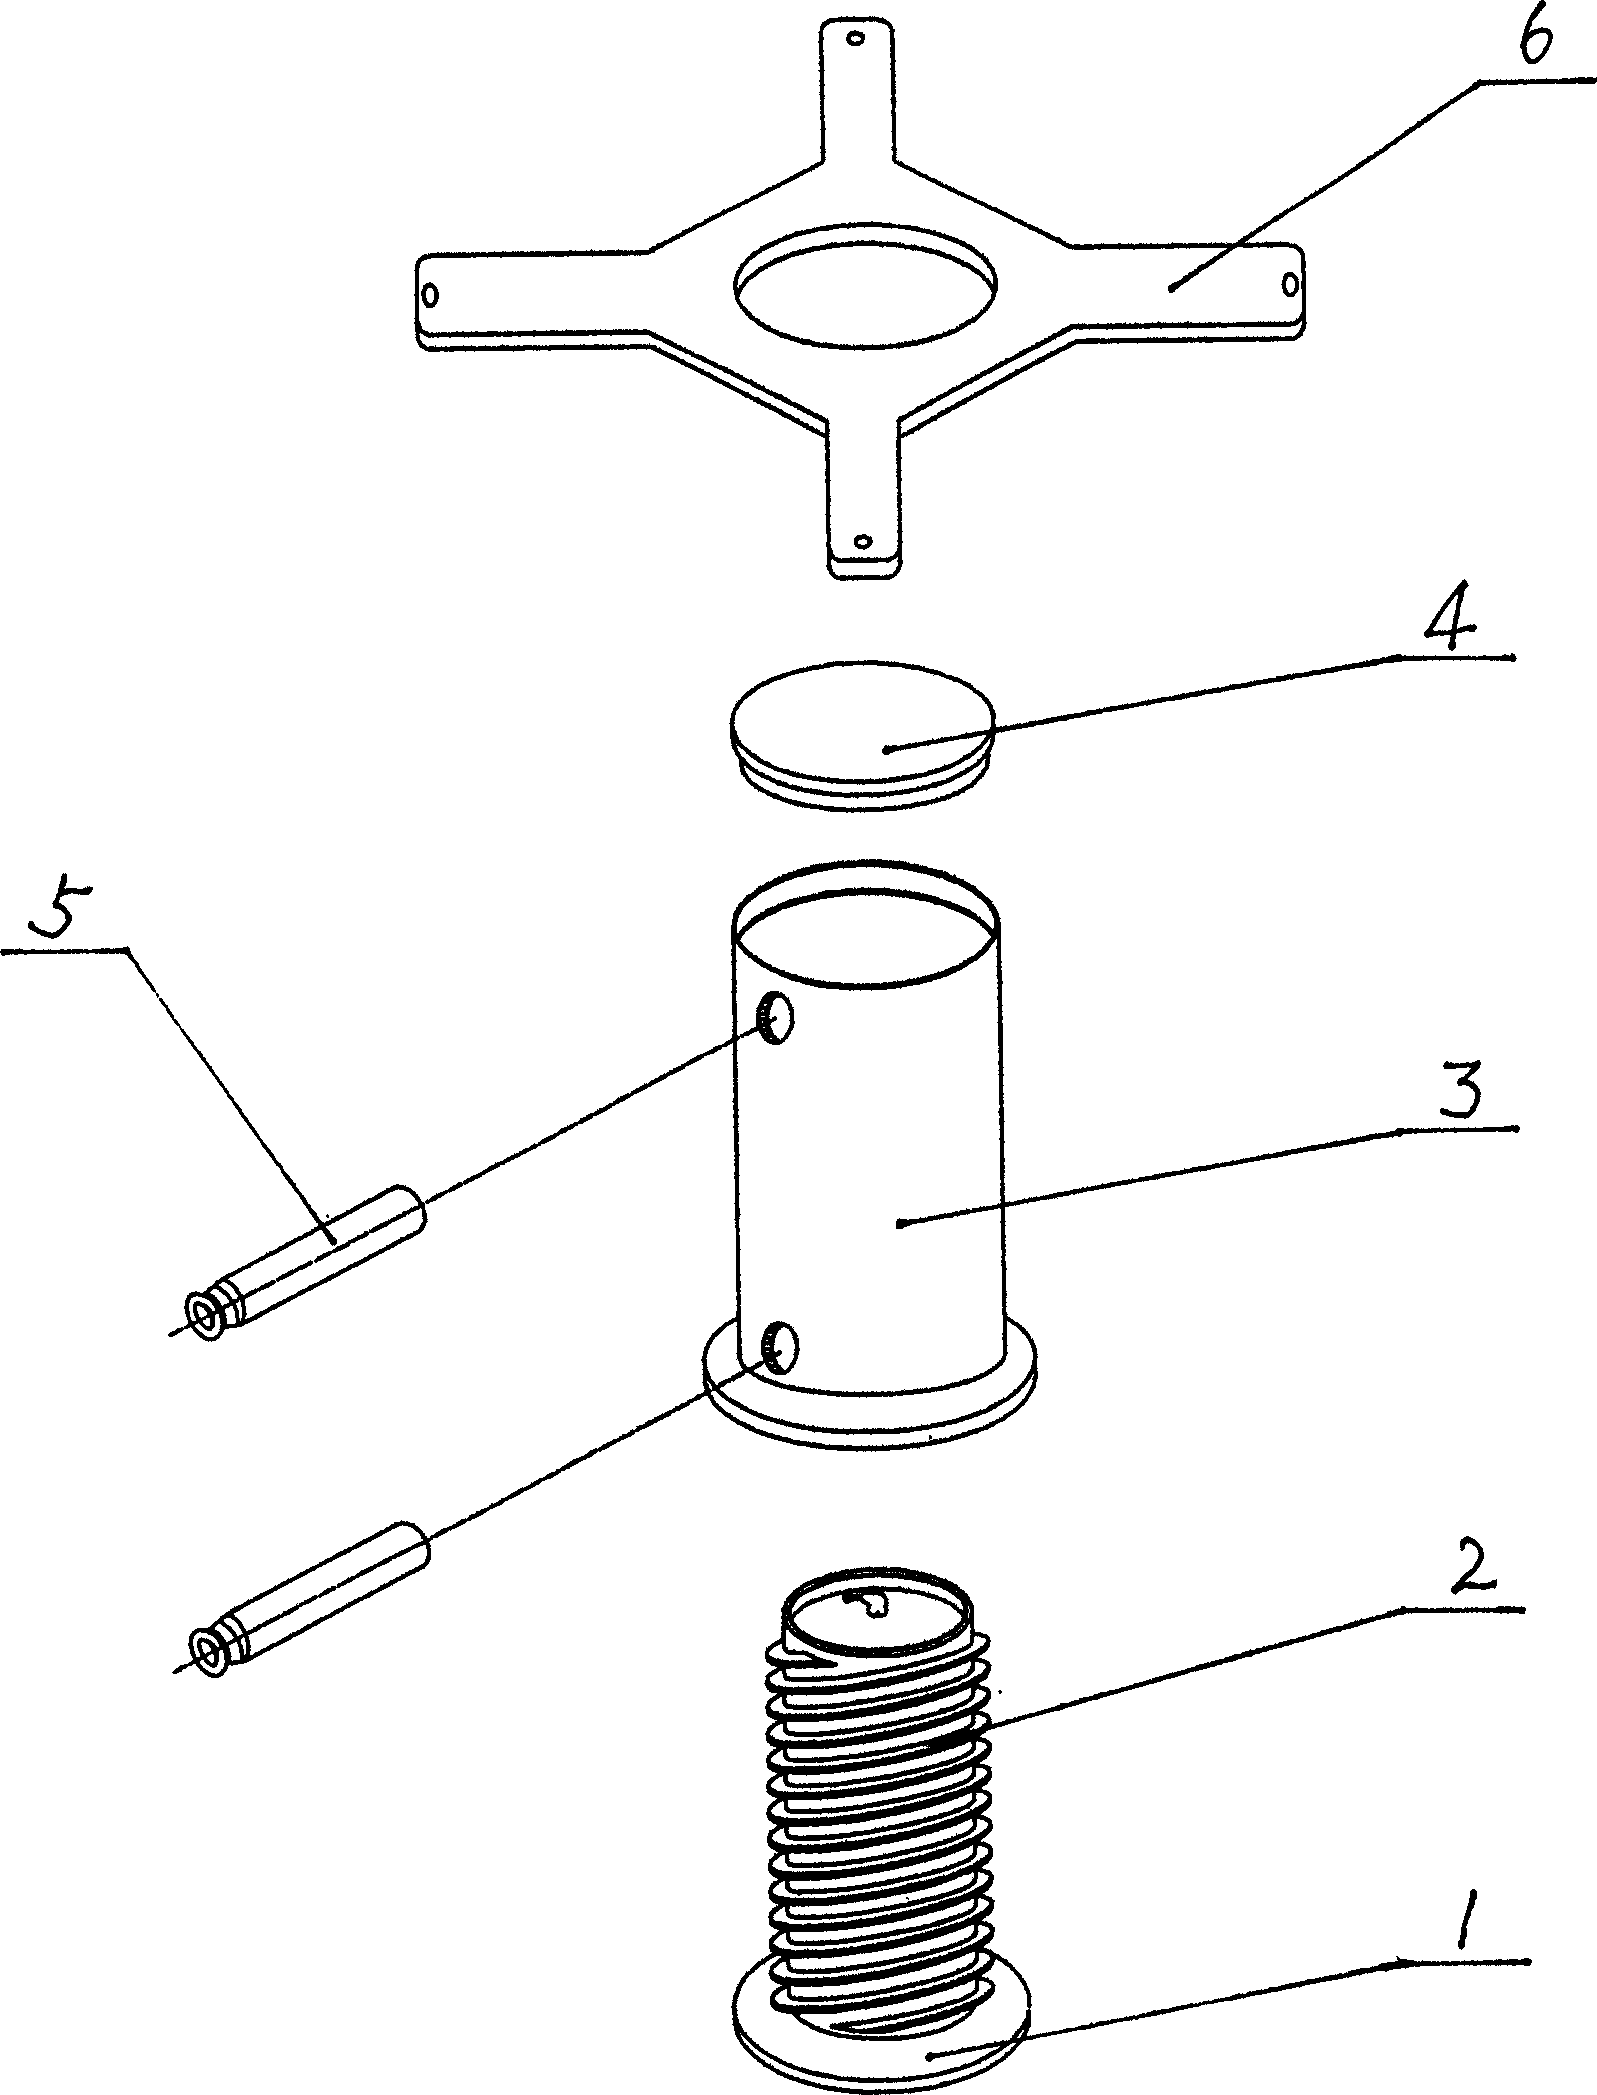 Liquid-cooled column-type heat tube radiator